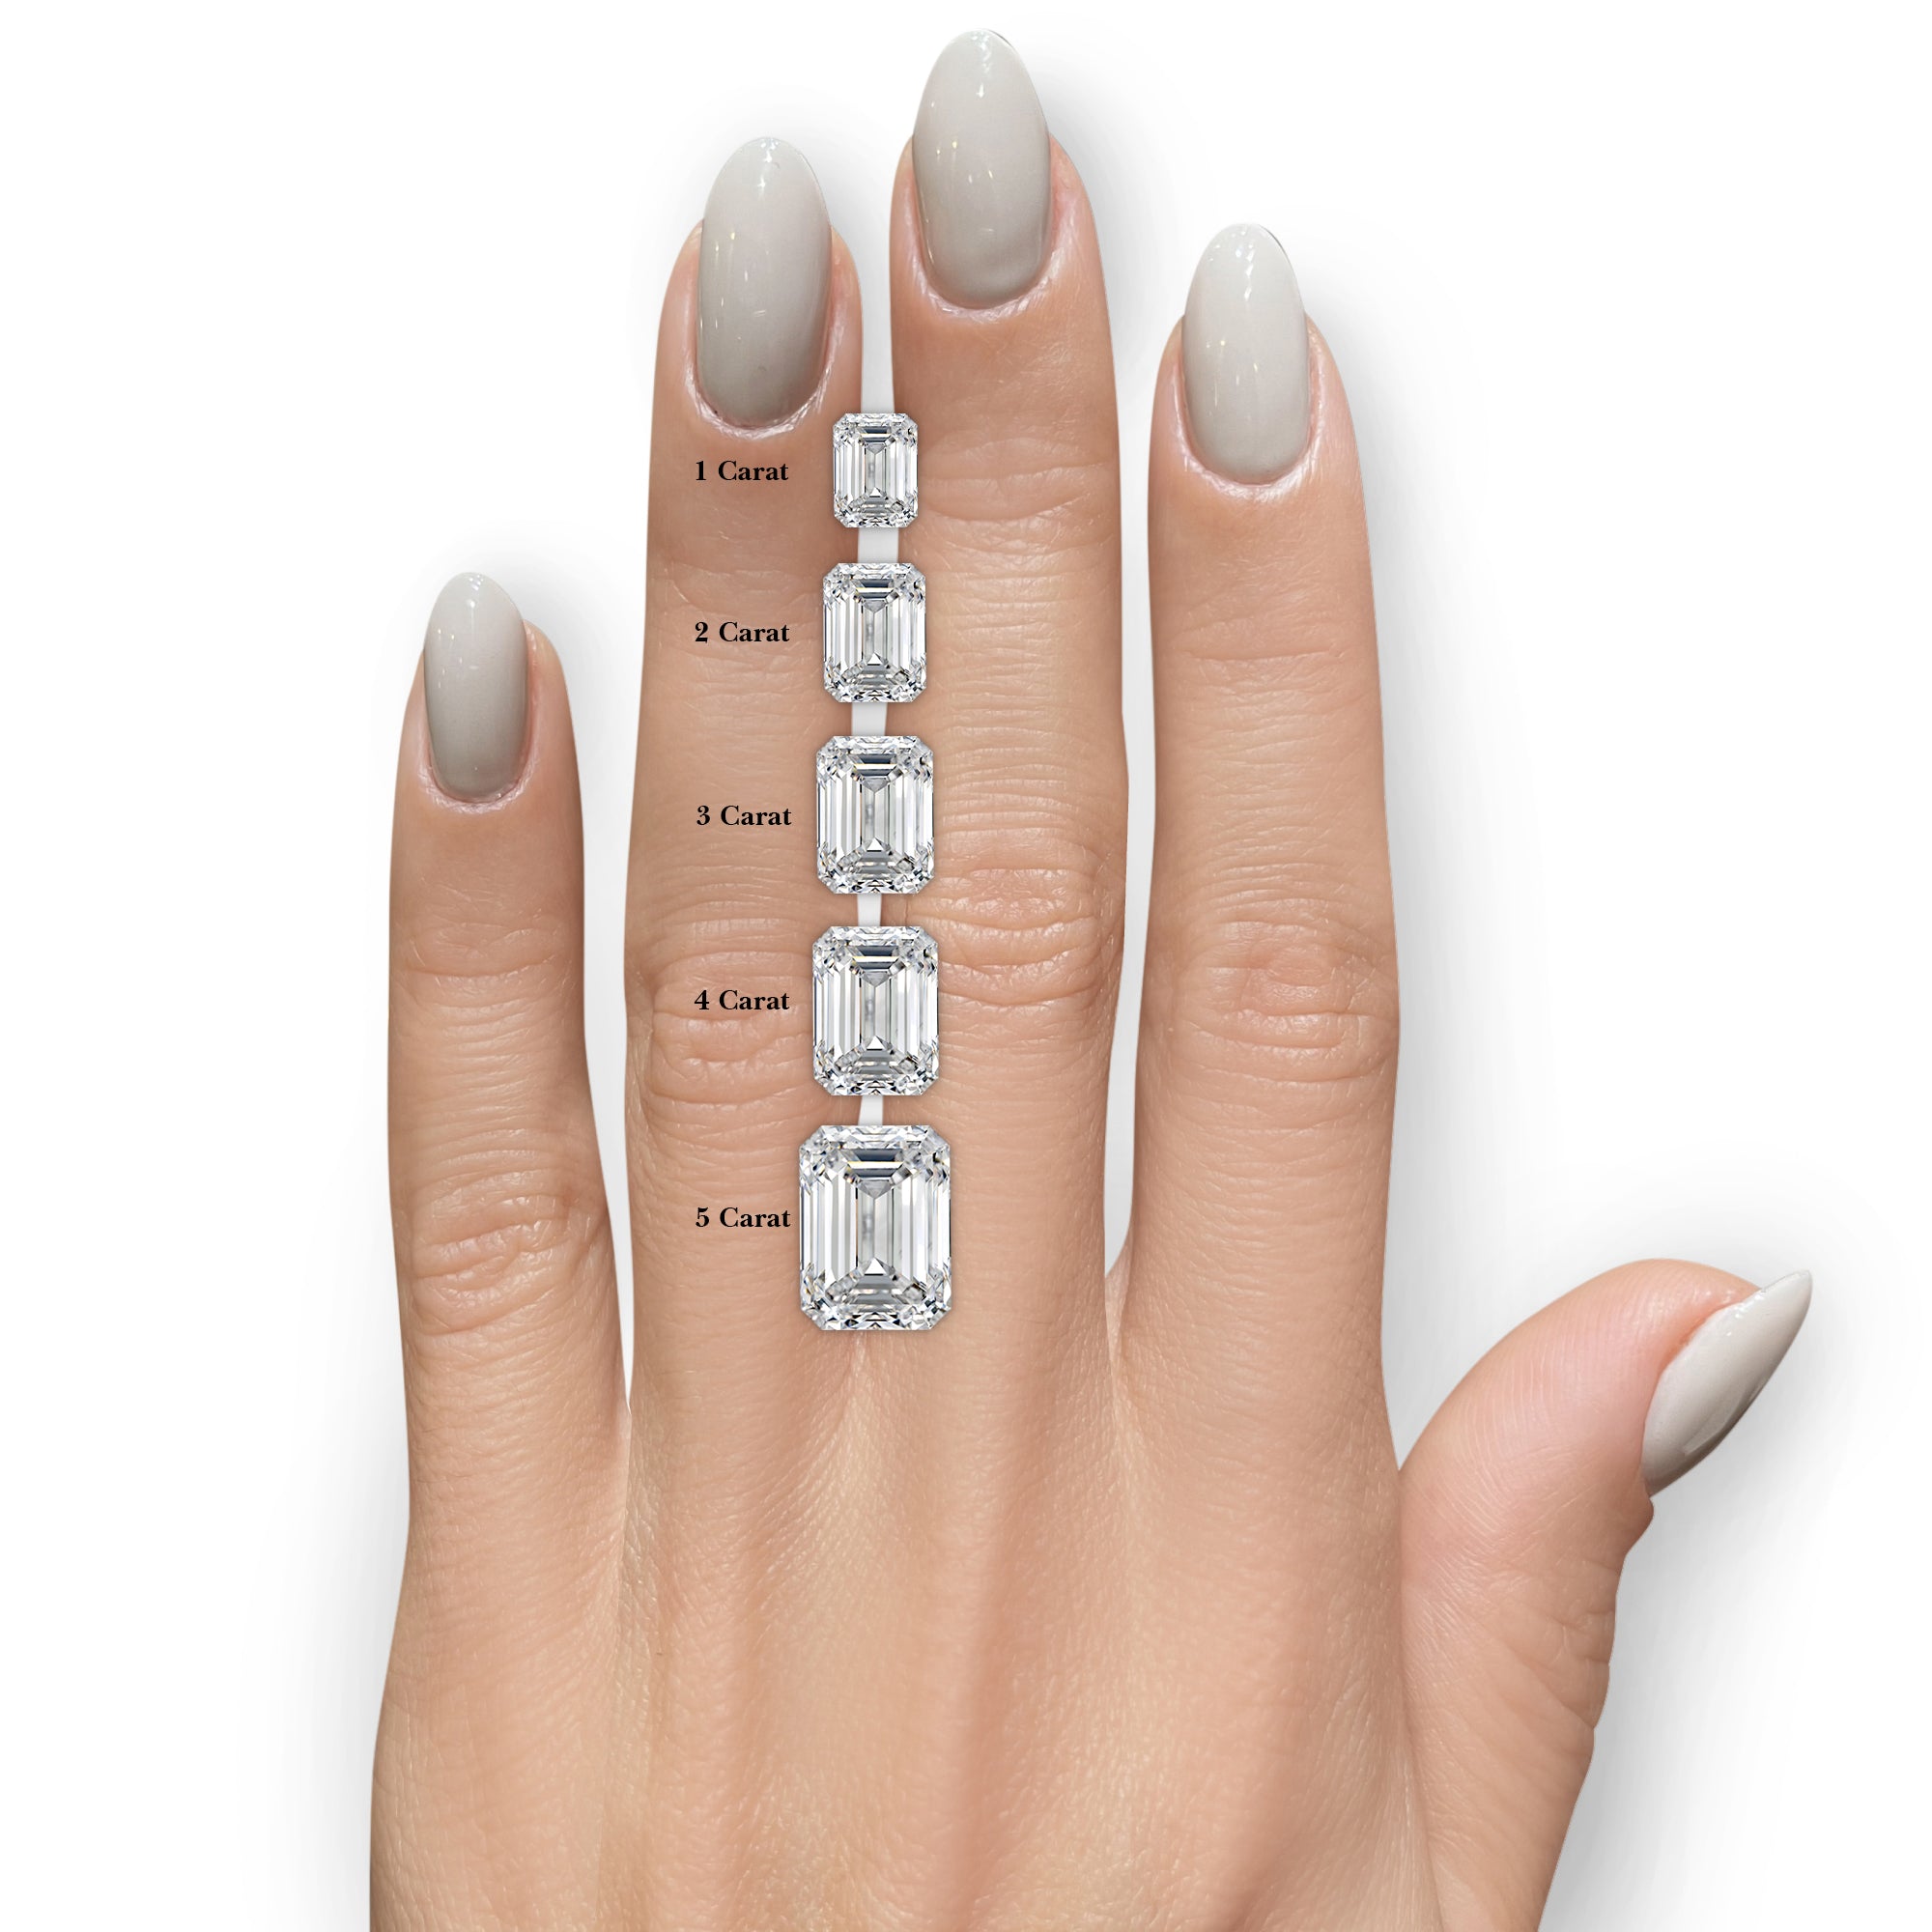 Viola Diamond Engagement Ring -18K Yellow Gold